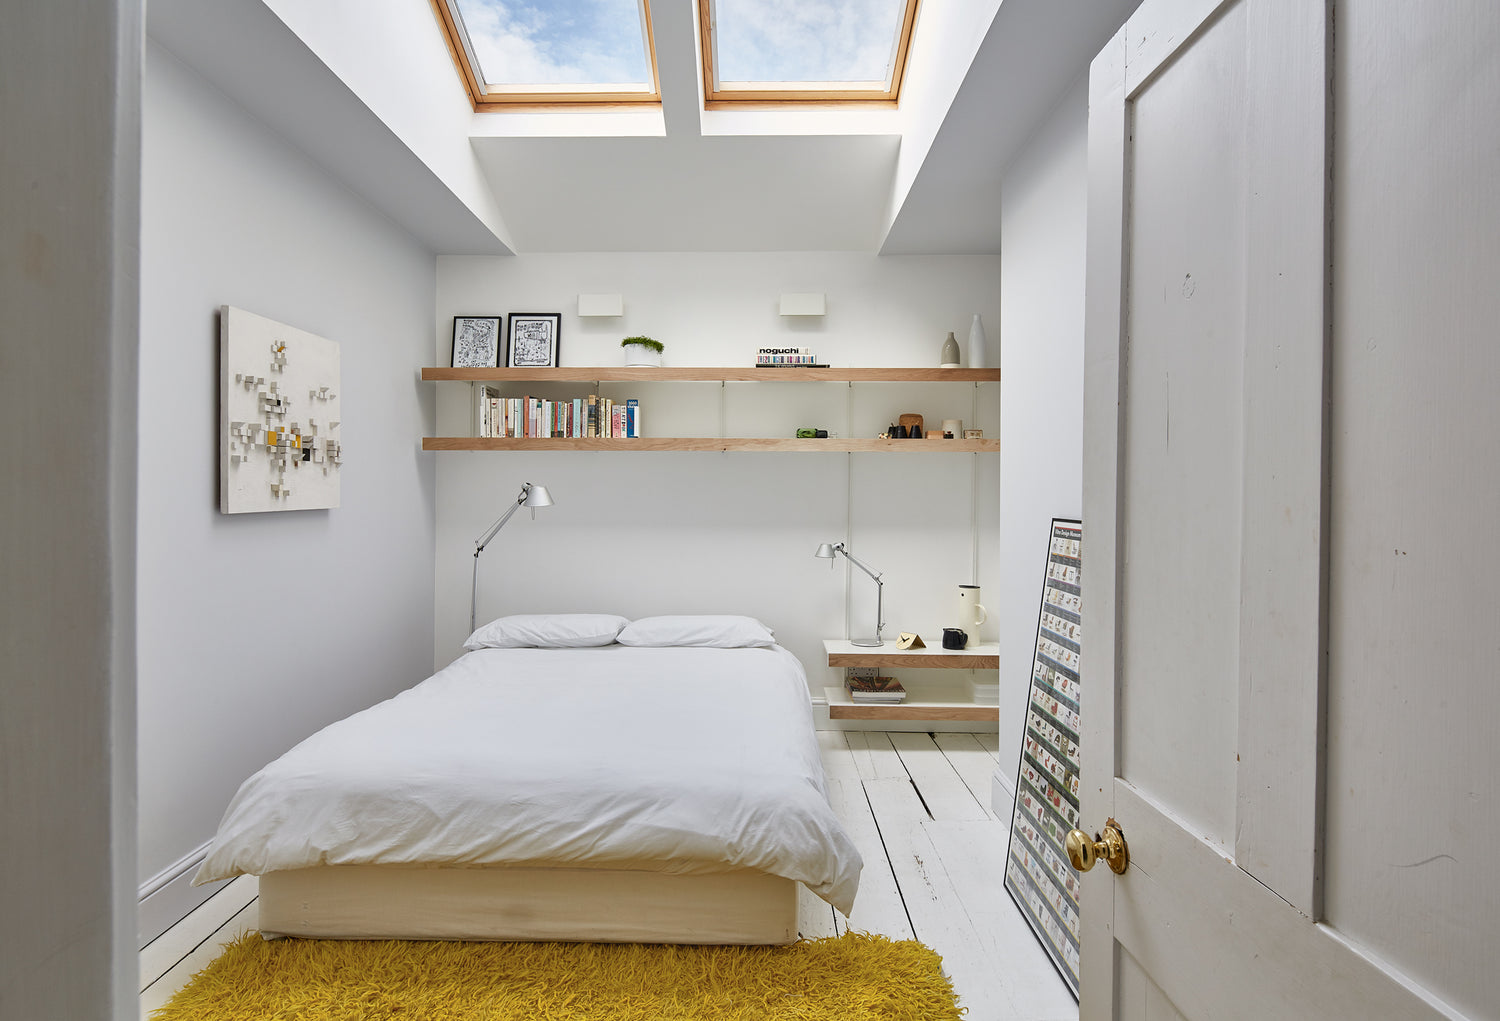 oak shelving system in white simple modern bedroom